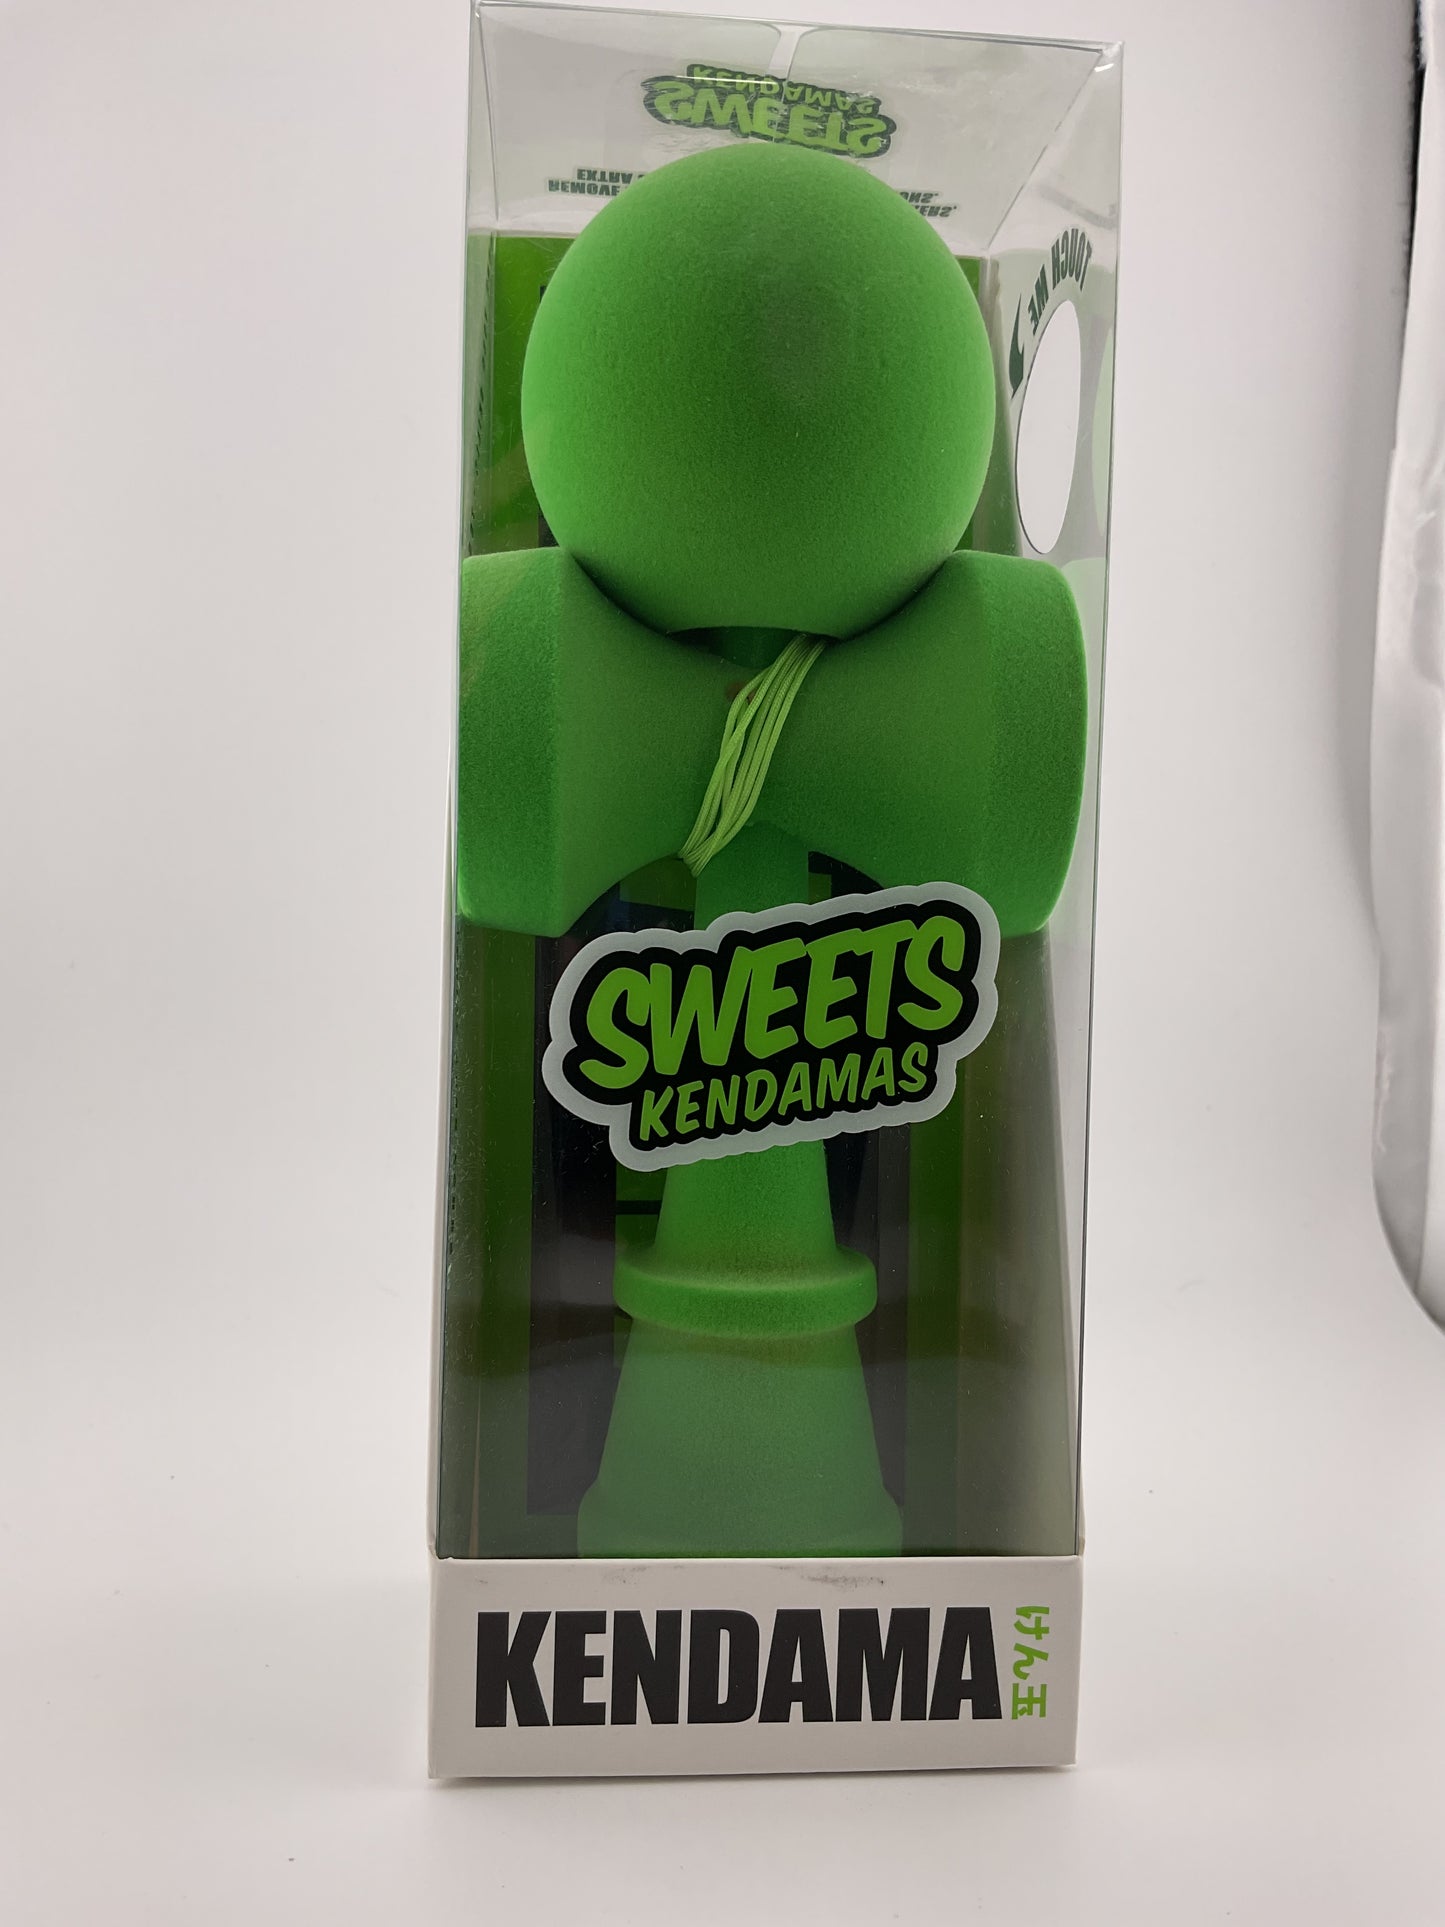 Sweets Kendamas - 
Fuzzy Green Kendama